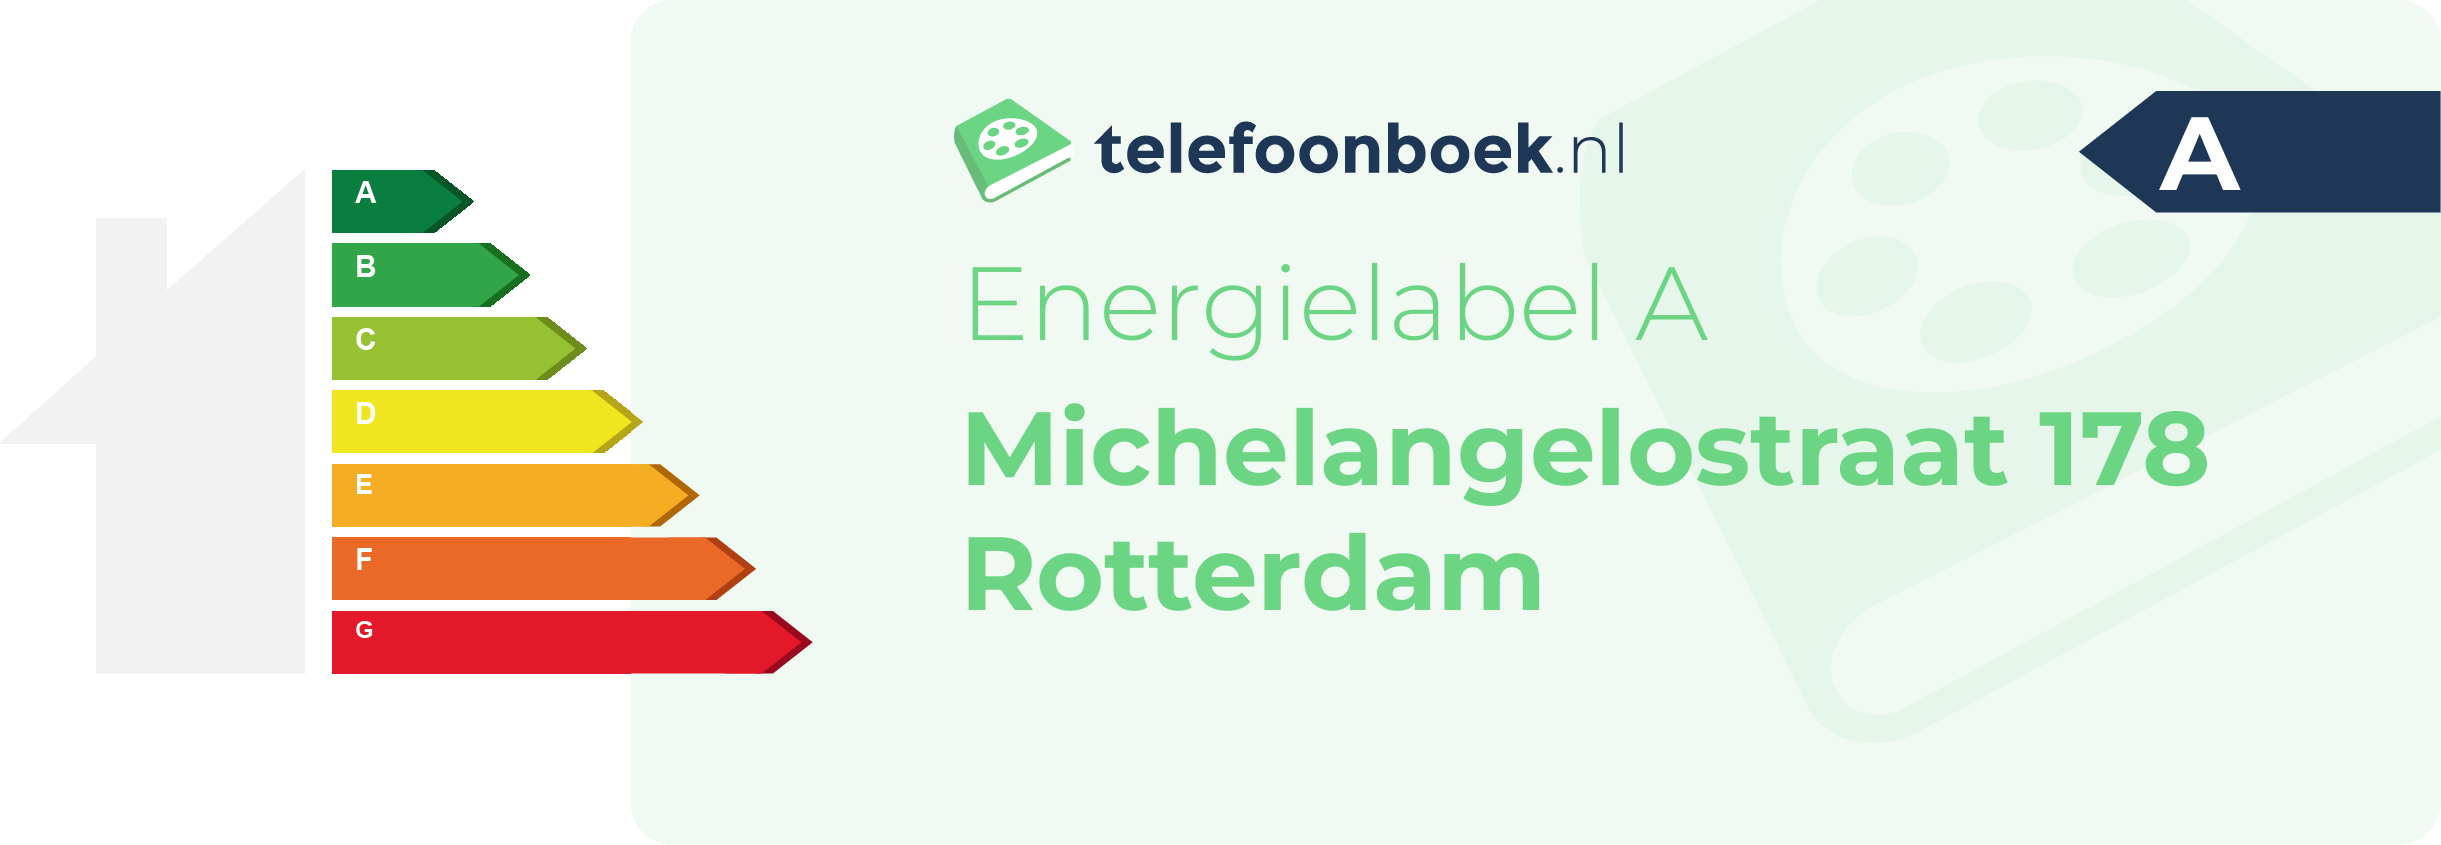 Energielabel Michelangelostraat 178 Rotterdam